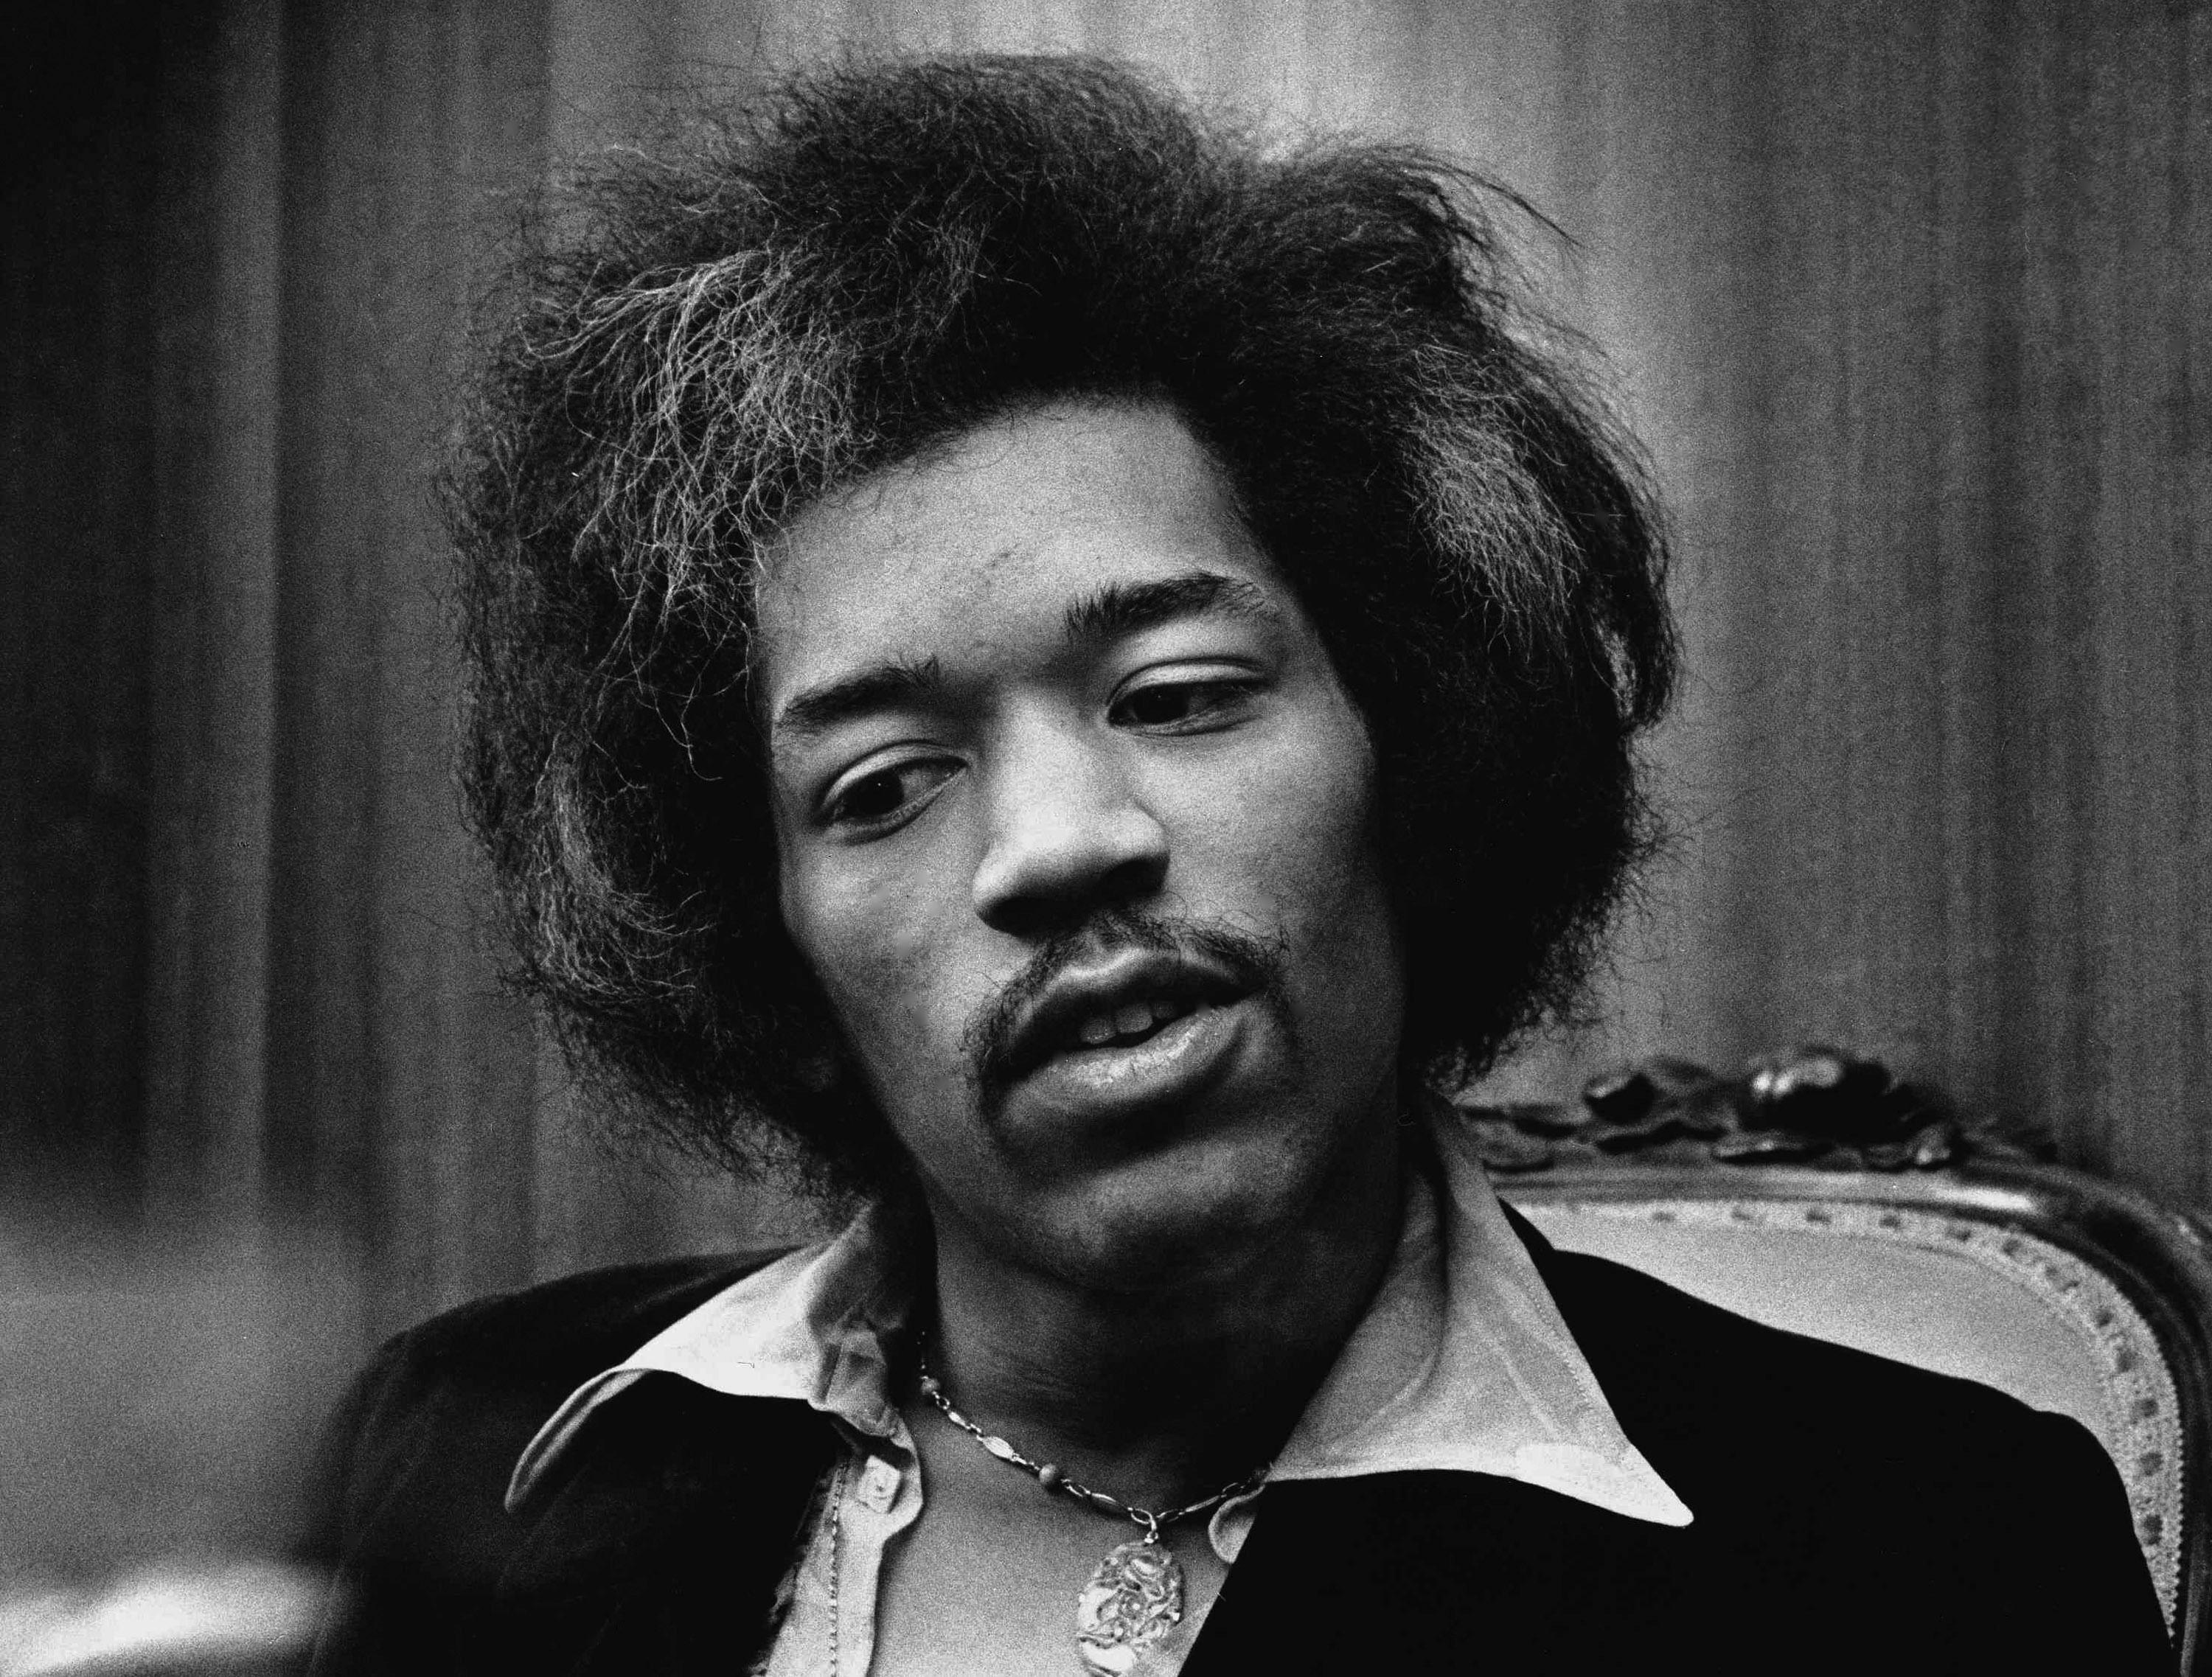 Jimi Hendrix Wallpaper Image Photo Picture Background